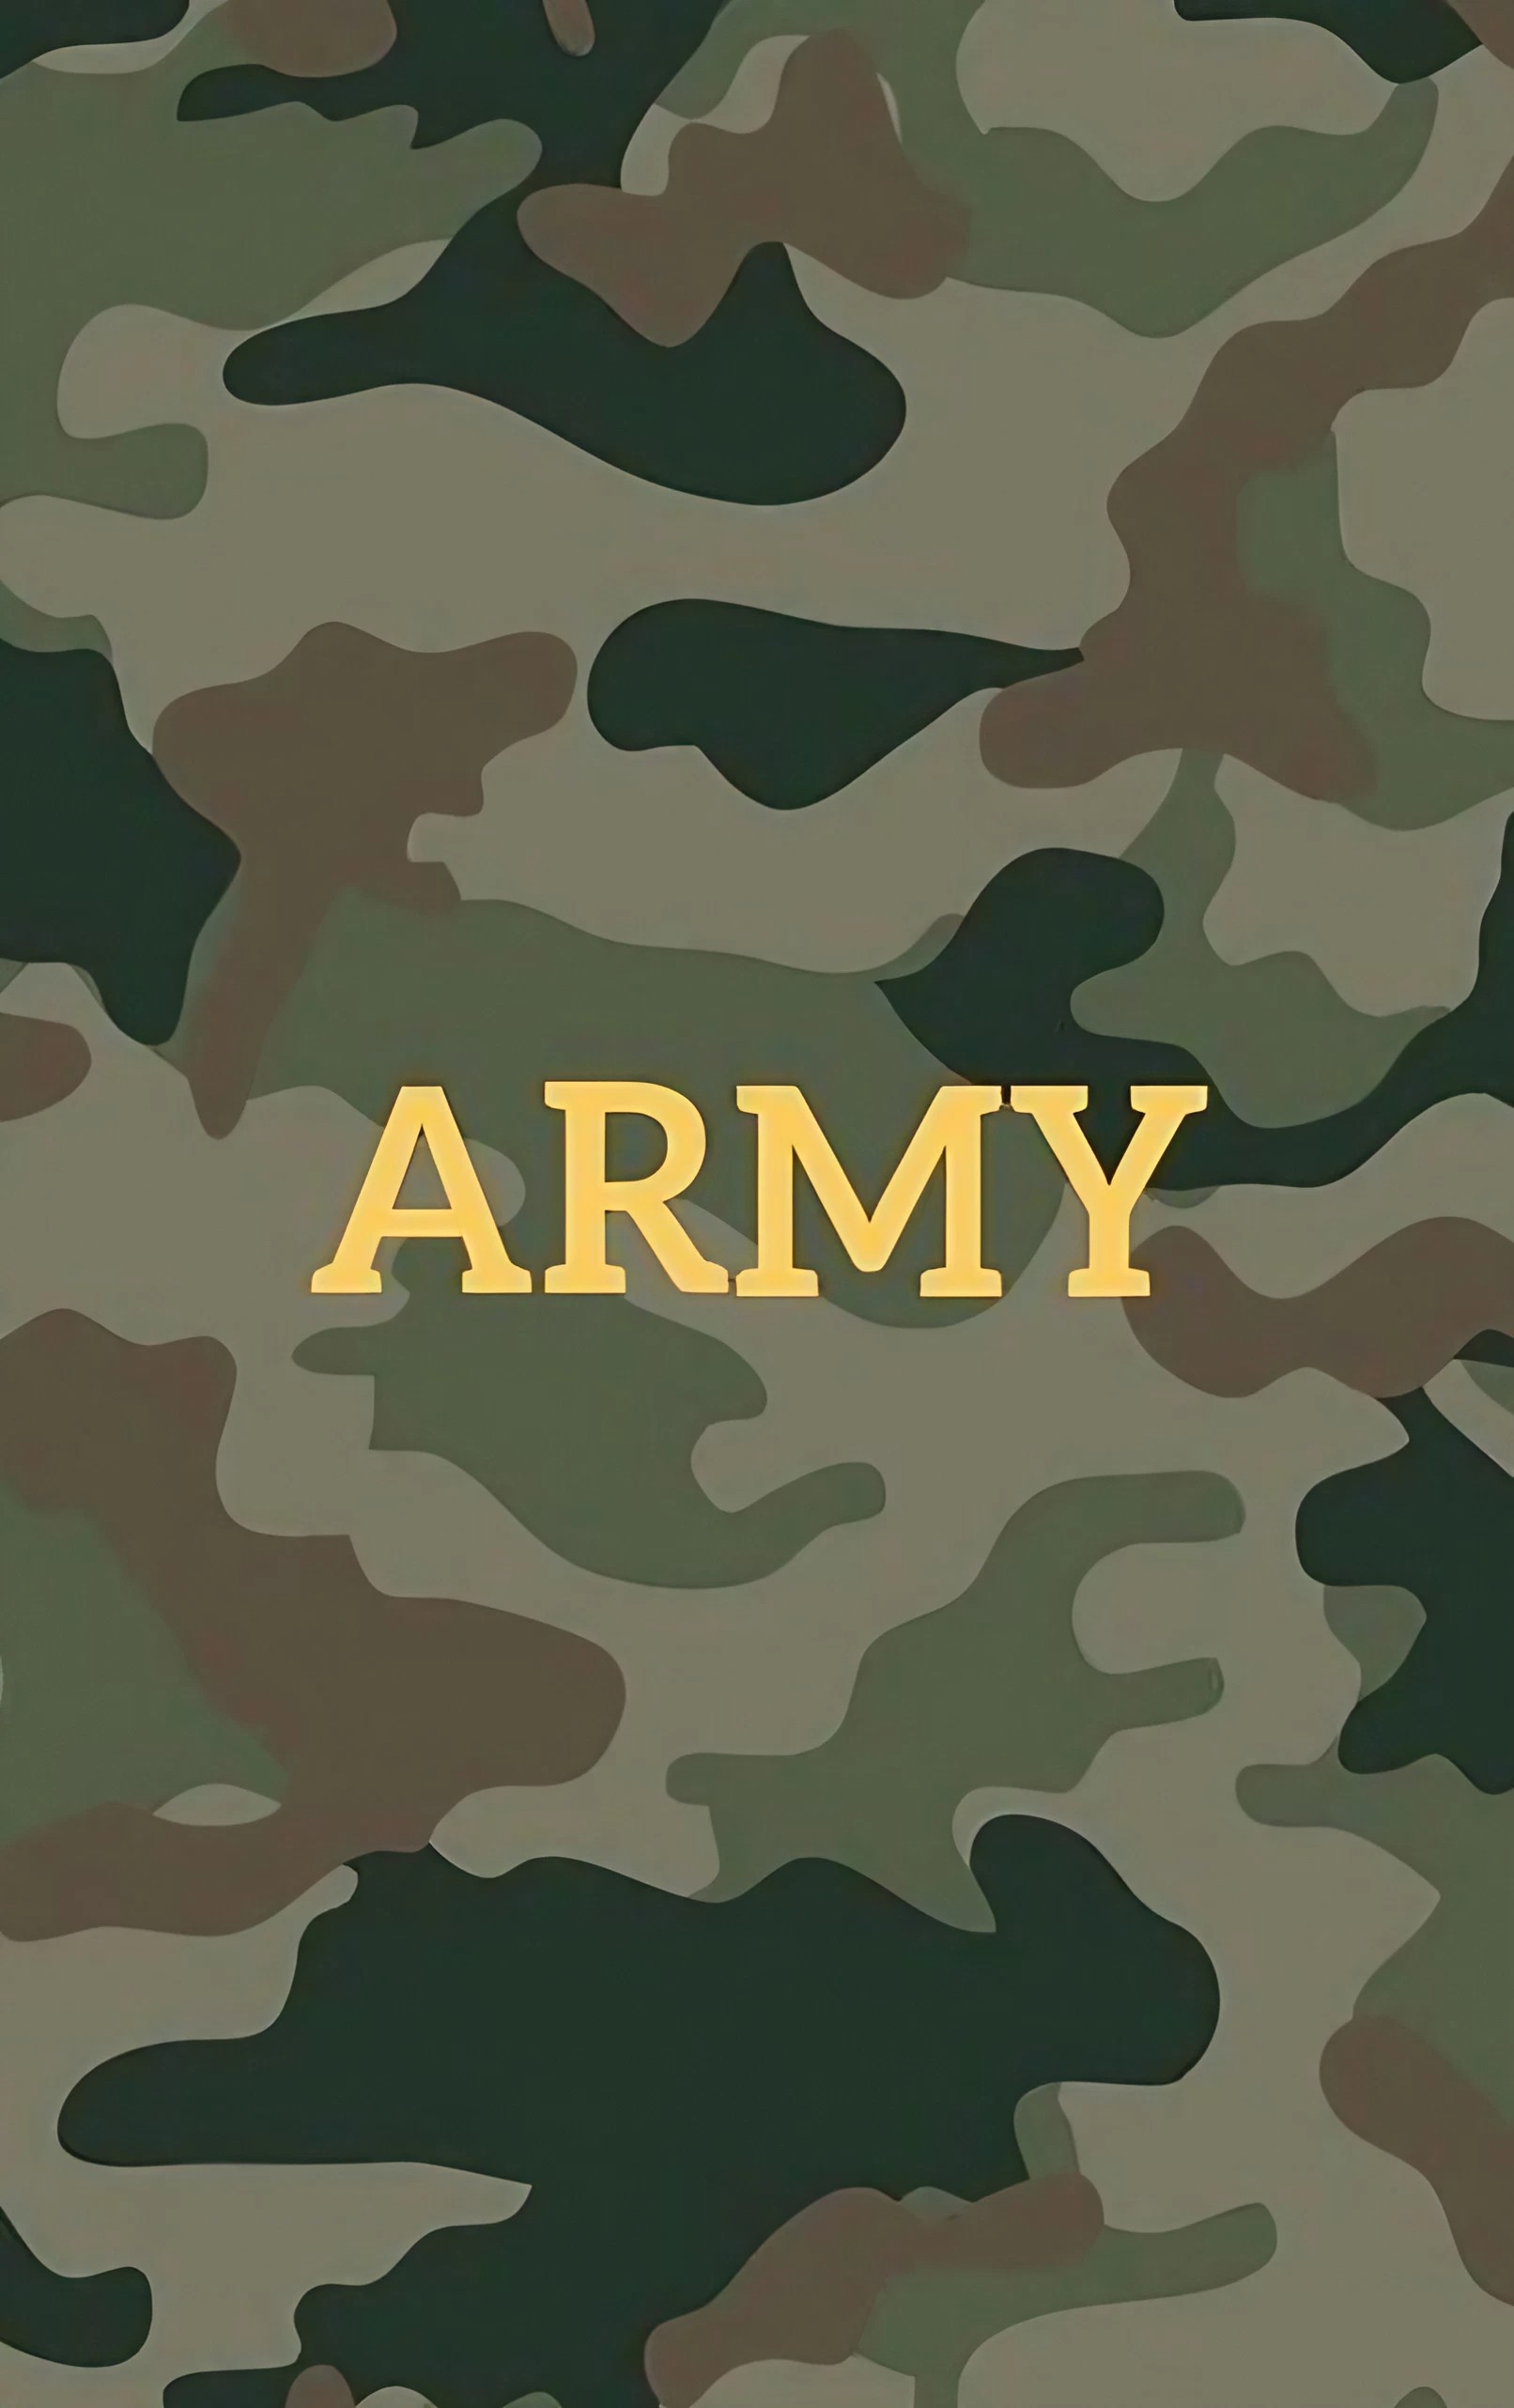 Army Name Photo - Military Army